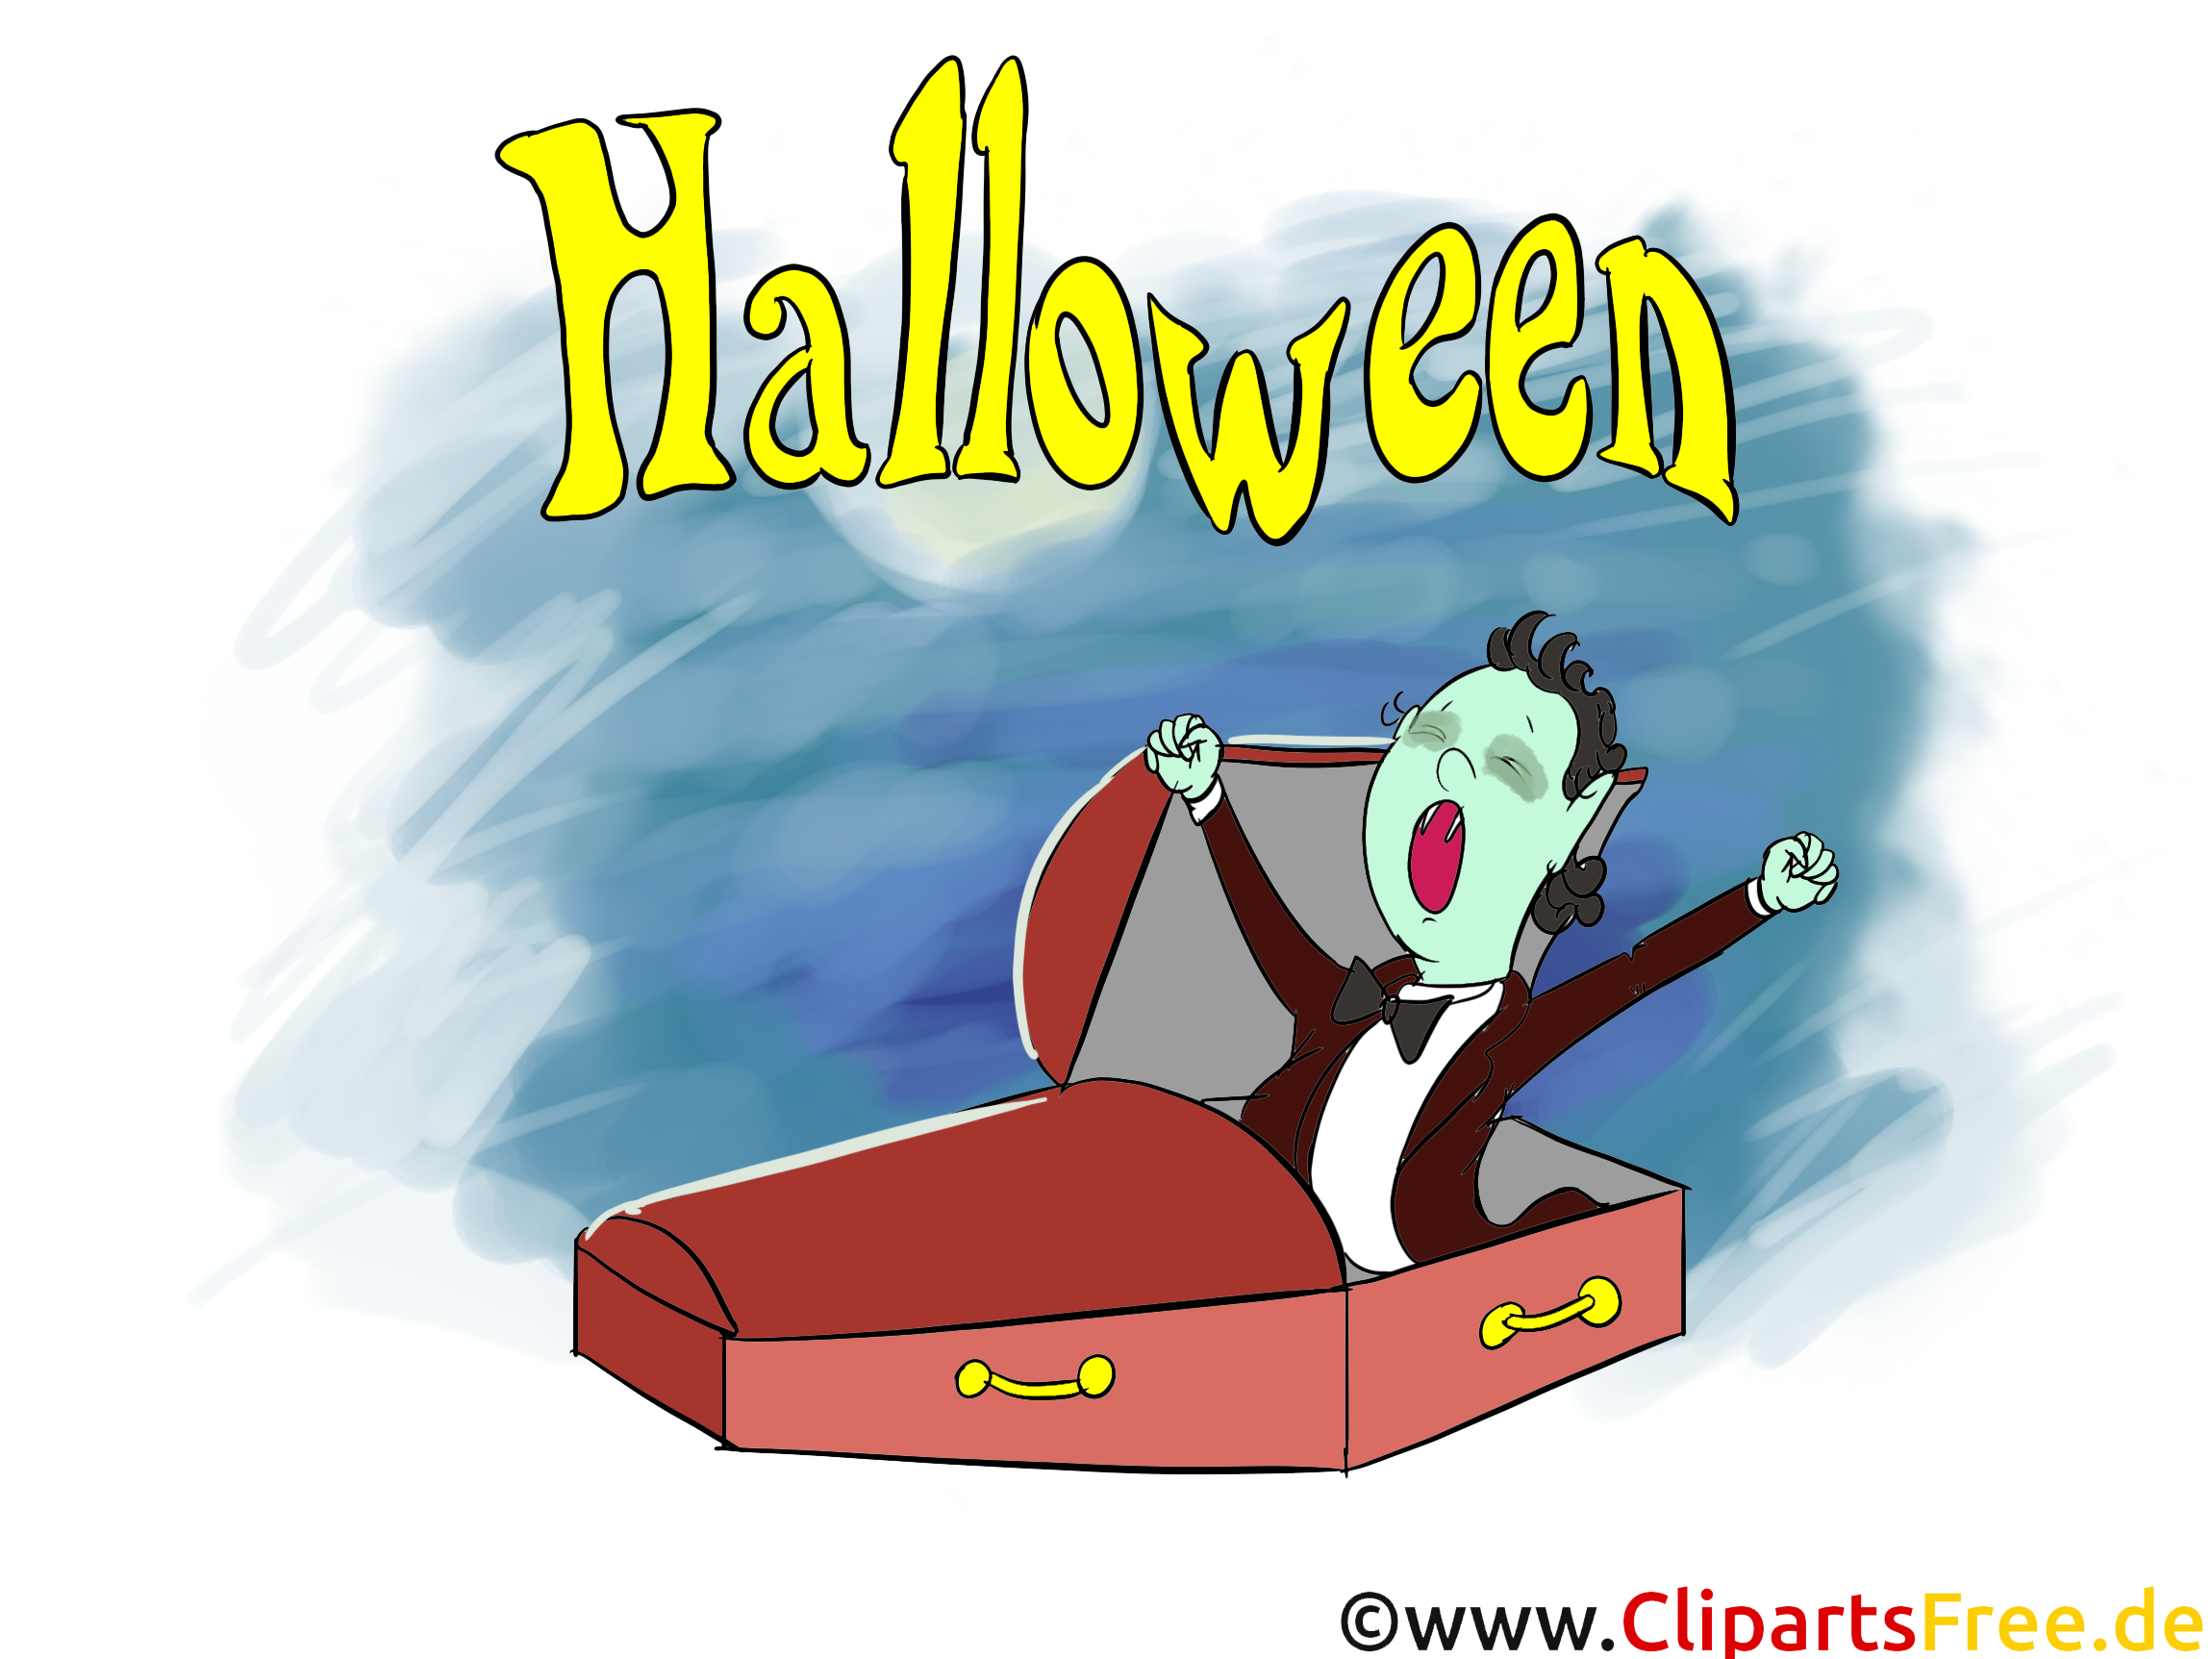 Vampire illustration gratuite - Halloween clipart